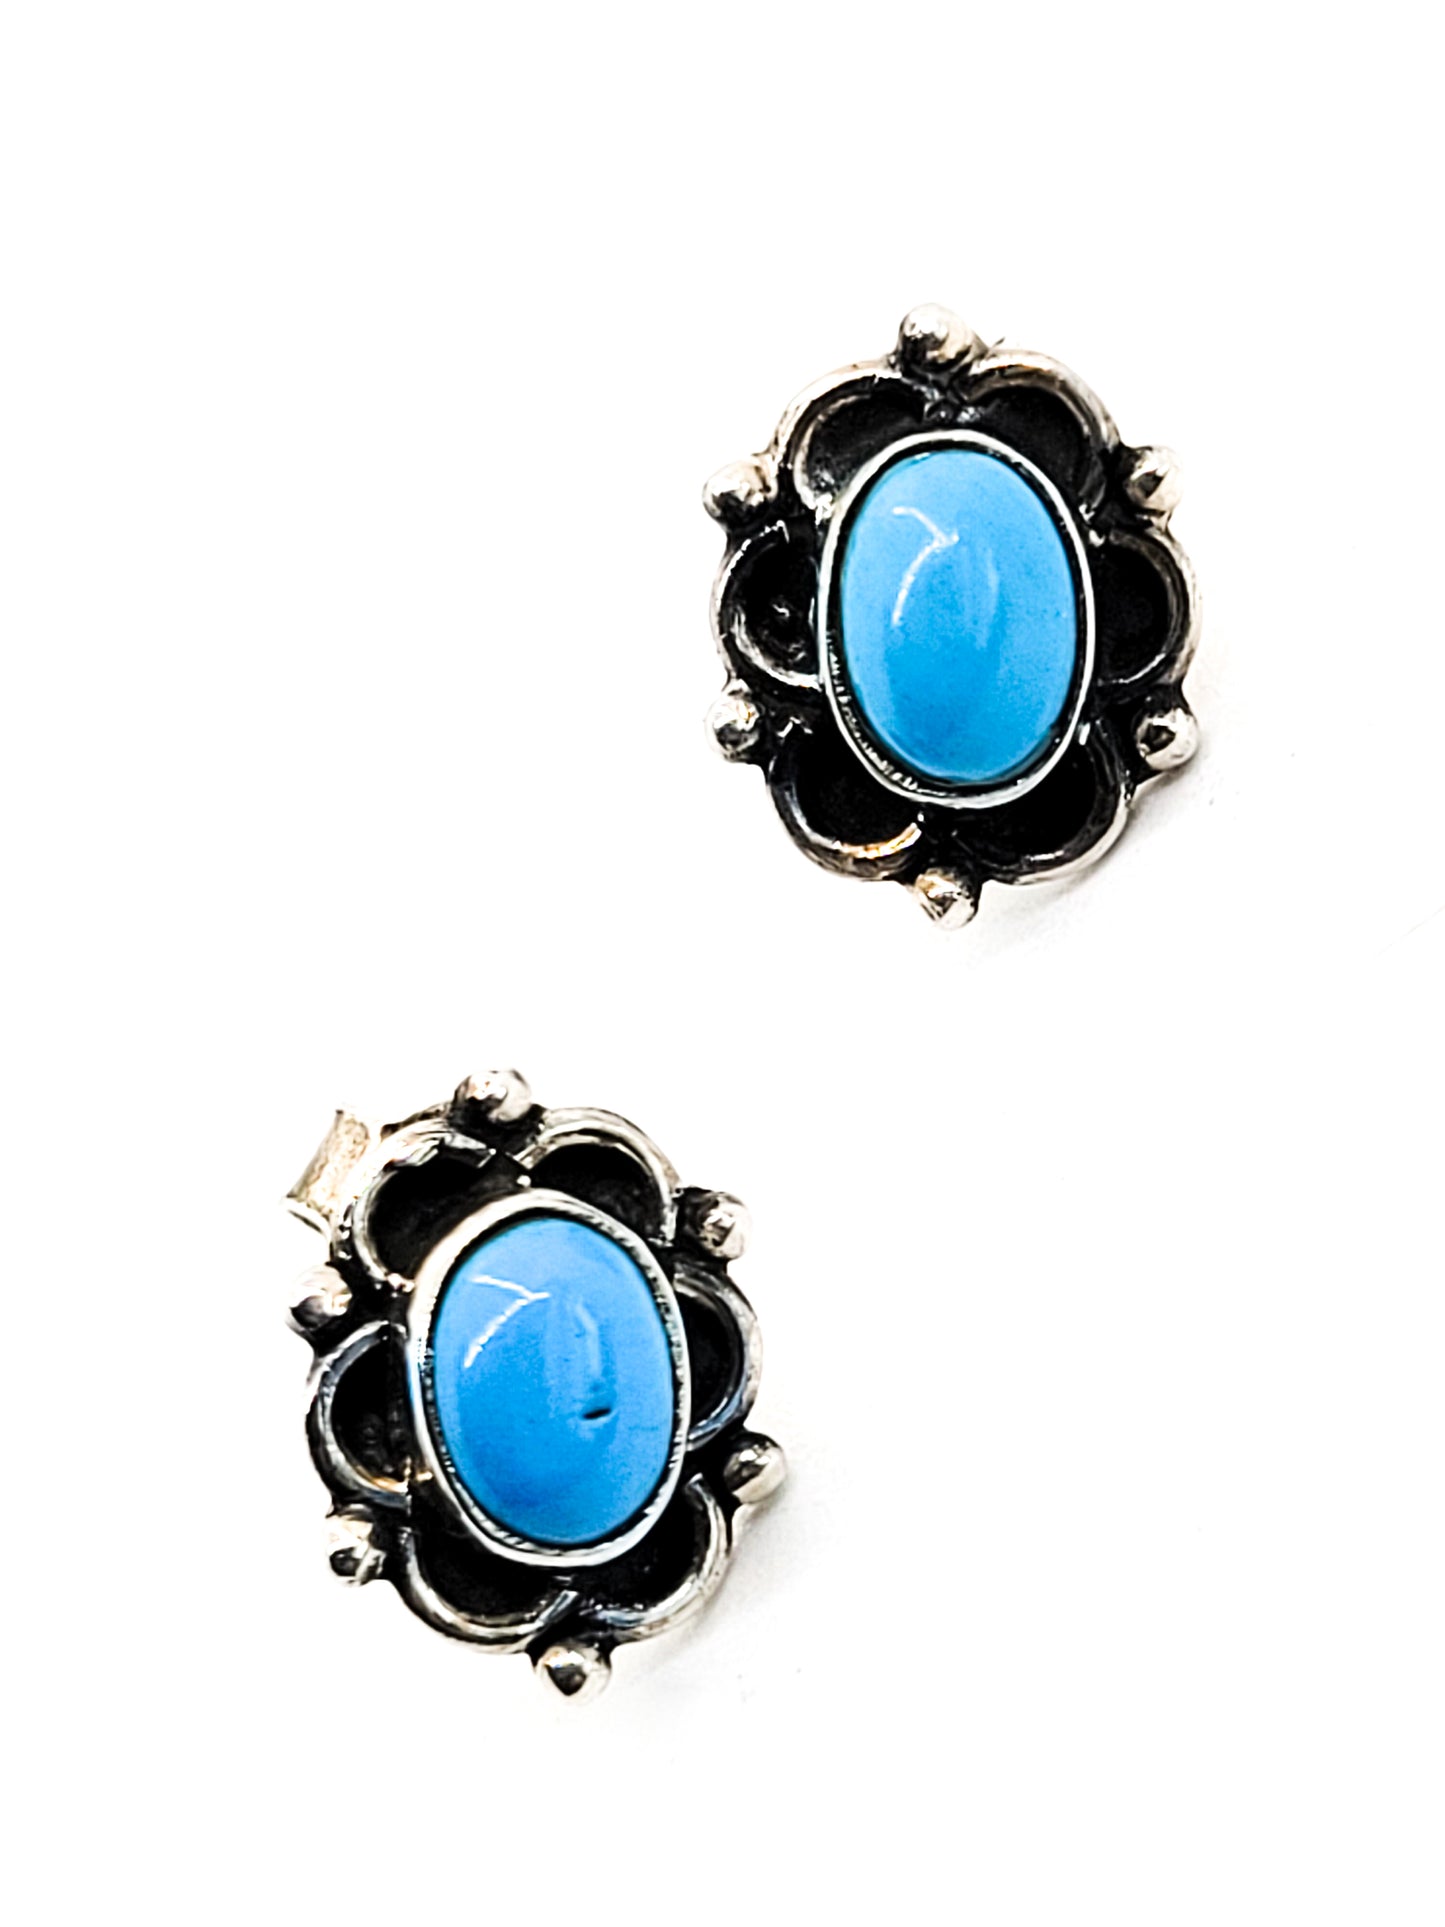 Turquoise vintage Southwestern sterling silver vintage stud earrings